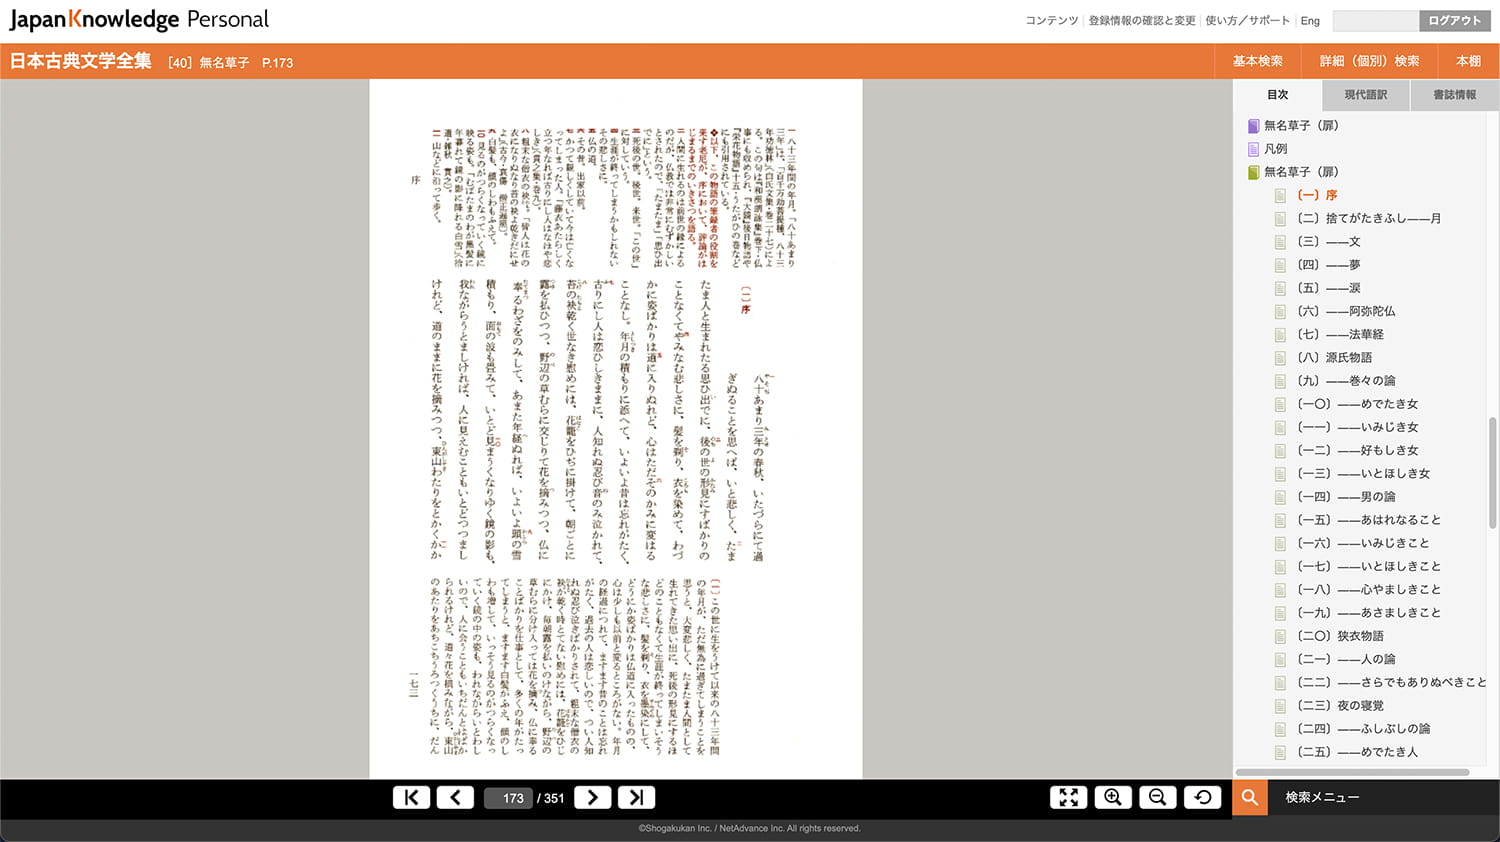 無名草子 日本古典文学全集 日本大百科全書 世界大百科事典 ジャパンナレッジ